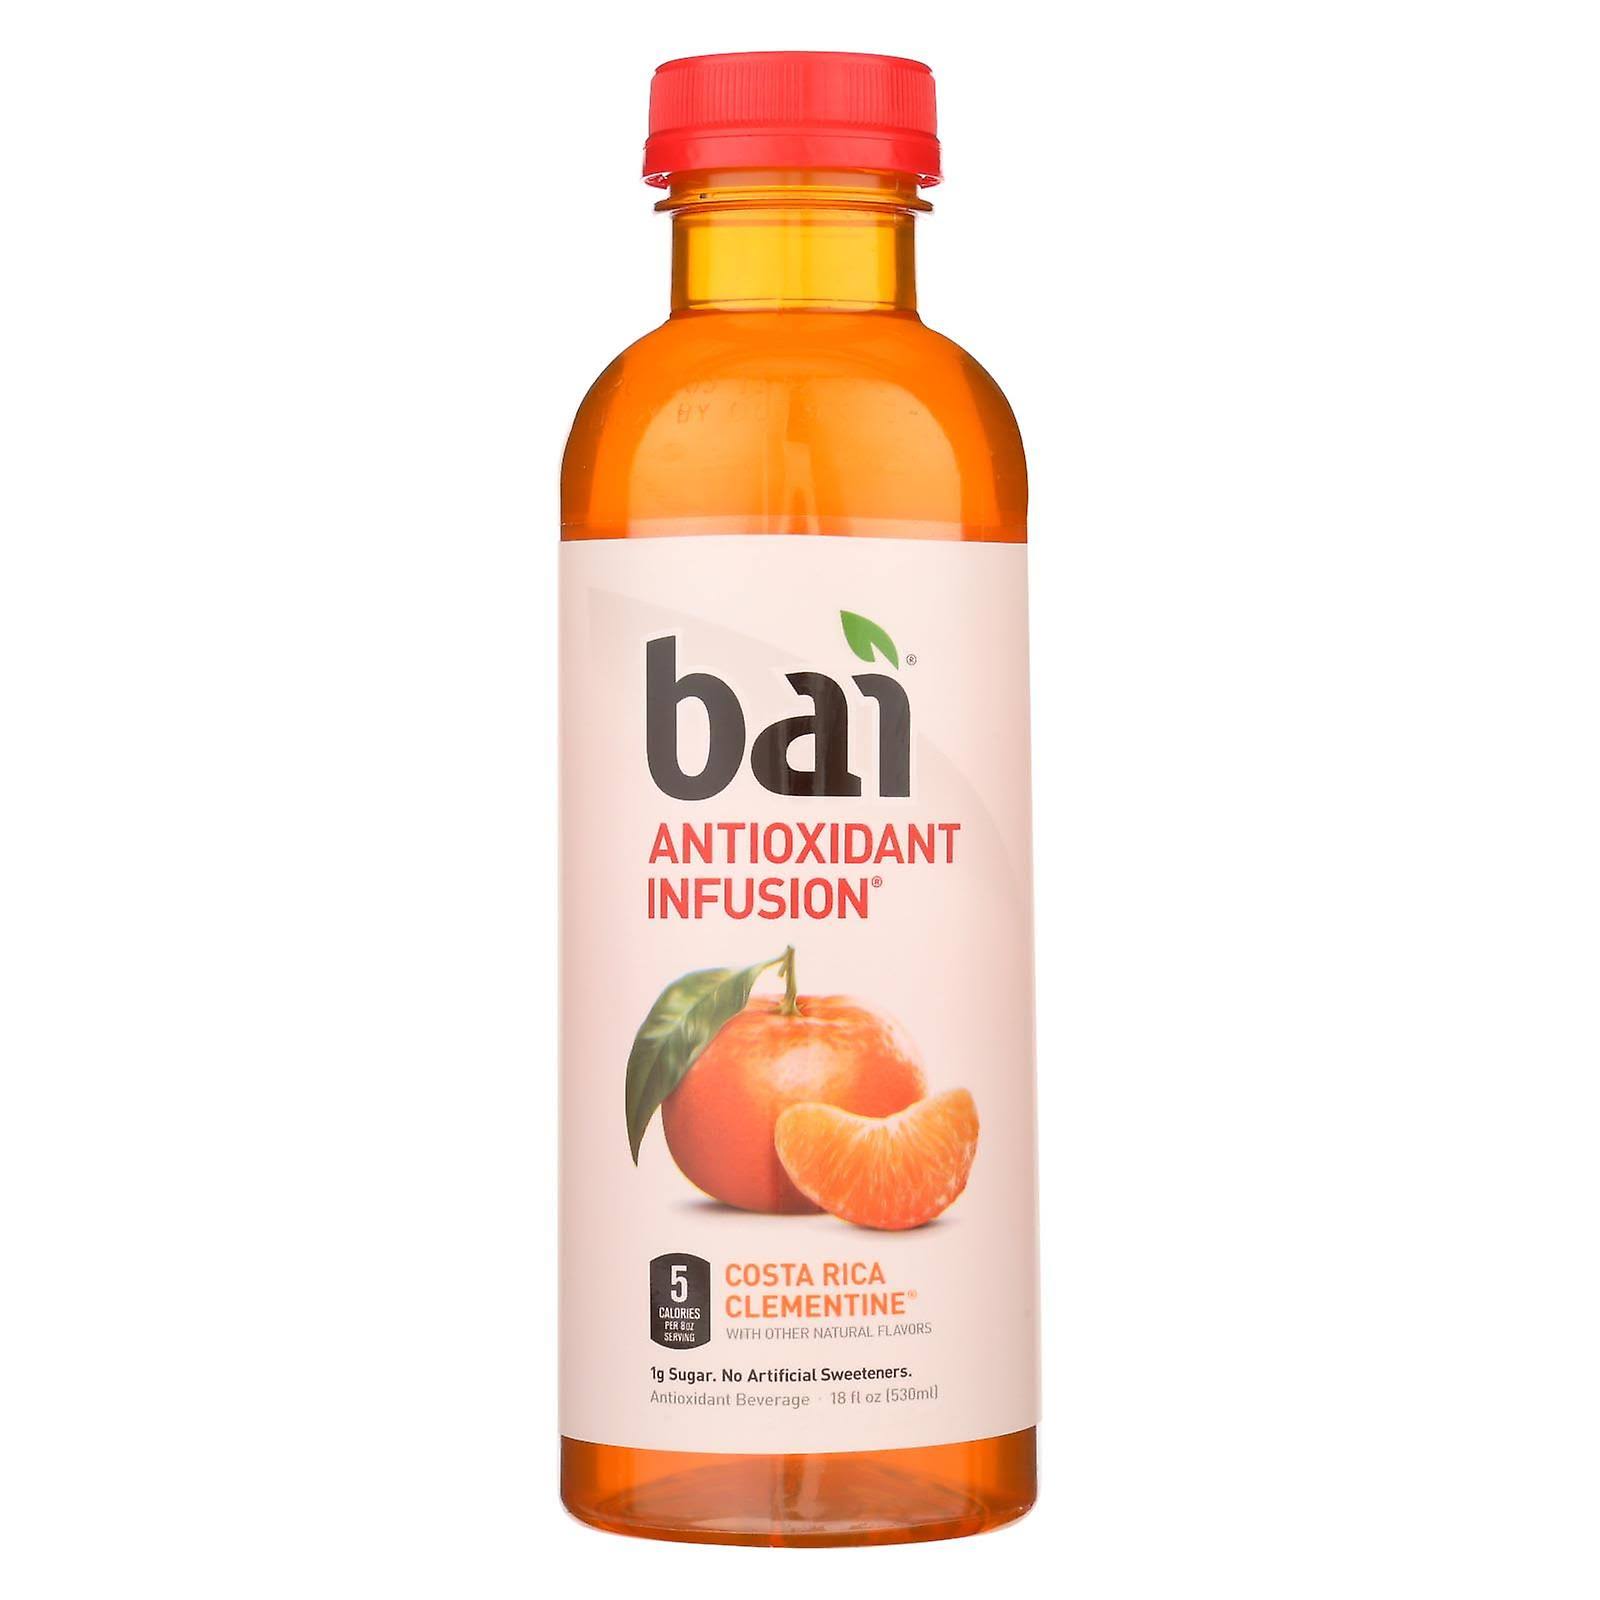 Bai5 Antioxidant Infusions Costa Rica Celementine Juice - 532ml